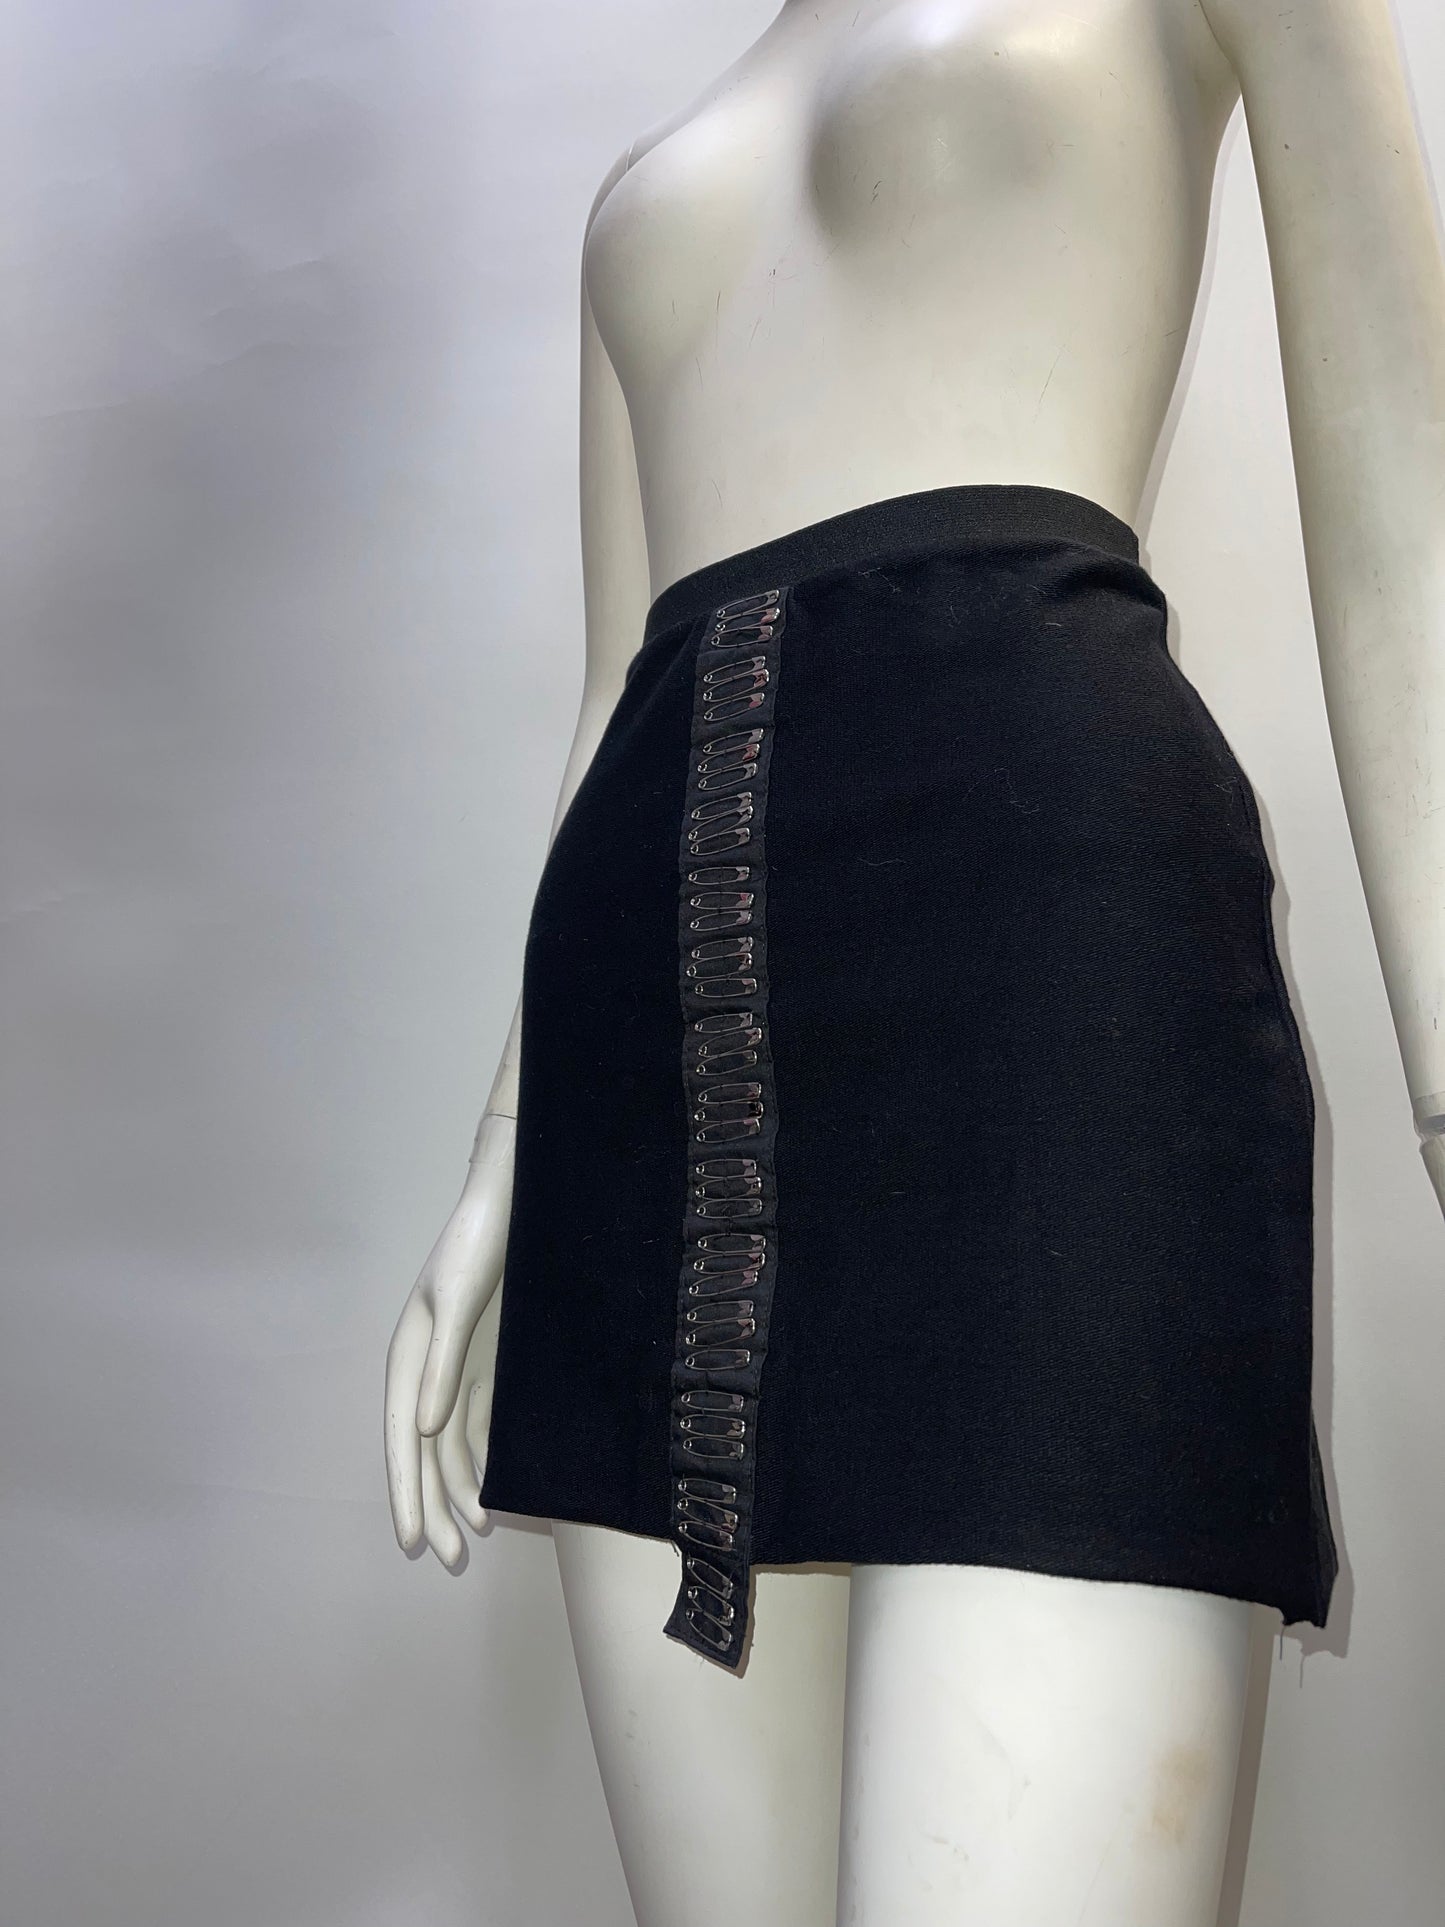 BSBW Safety Pin Bodycon Elastic Waist Black Mini Skirt (Size S)